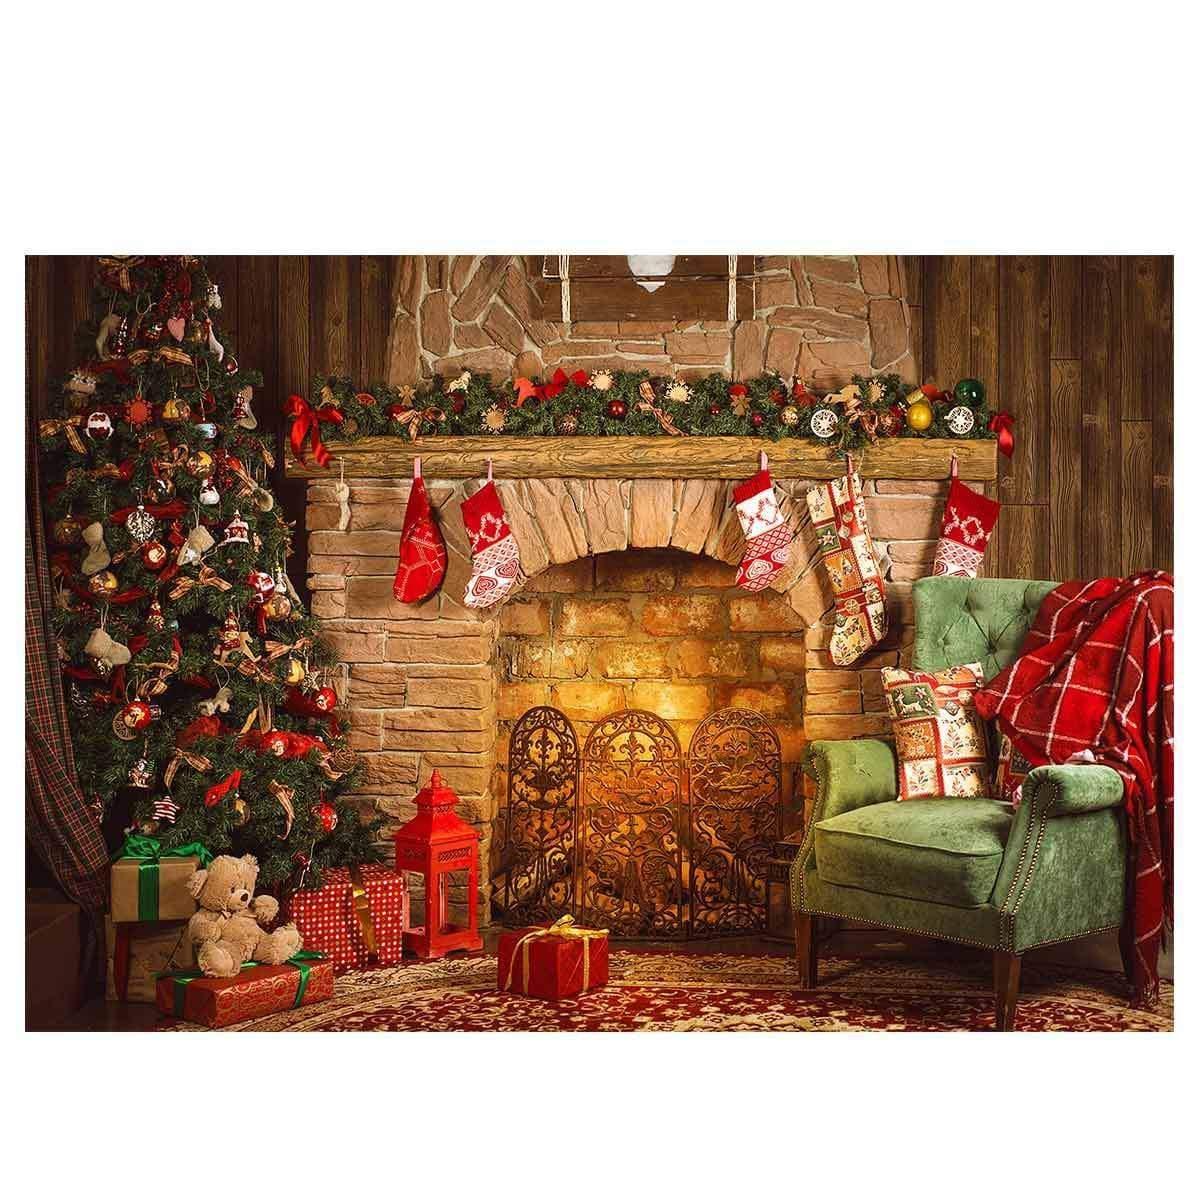 Allenjoy Christmas Tree Red Socks Hang on Fireplace Backdrop - Allenjoystudio